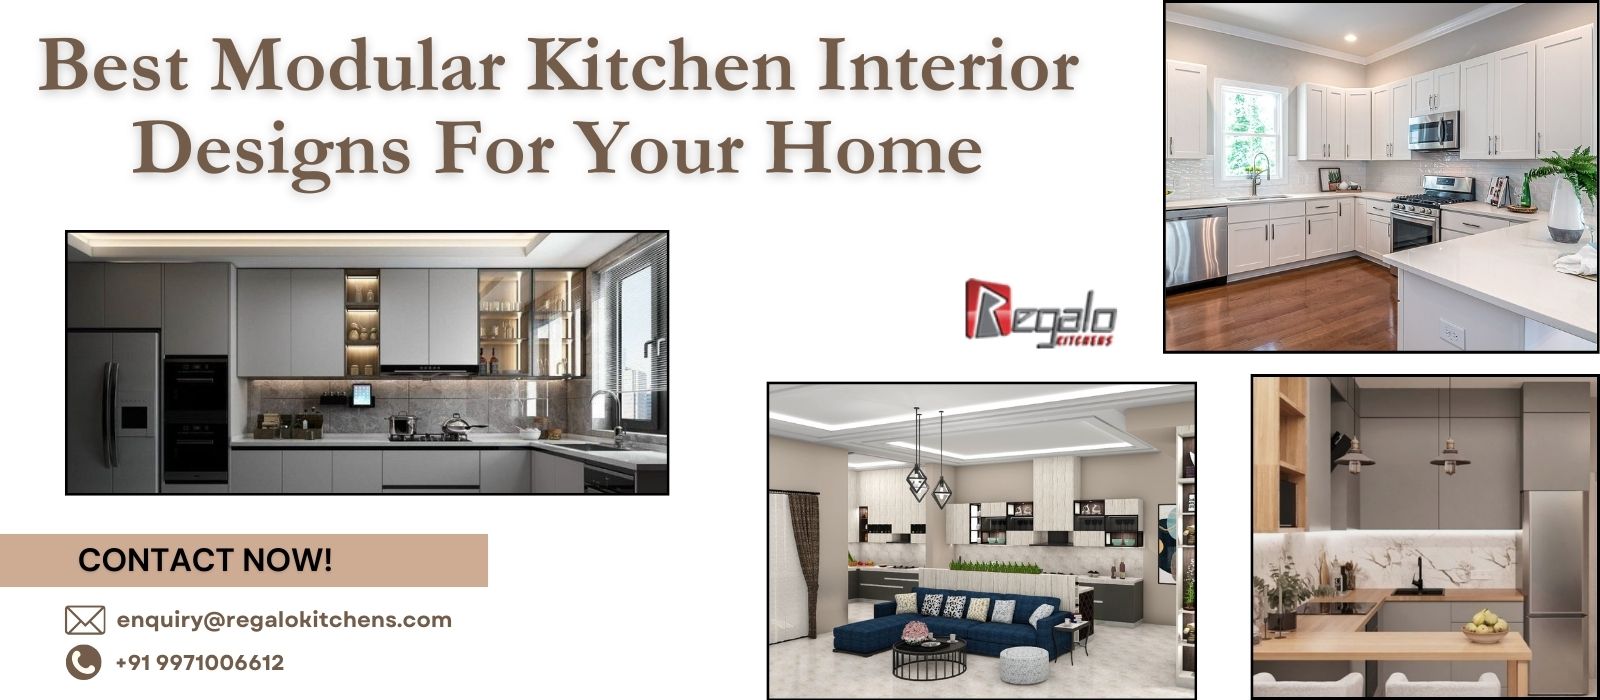 Best Modular Kitchen Interior Designs For Your Home